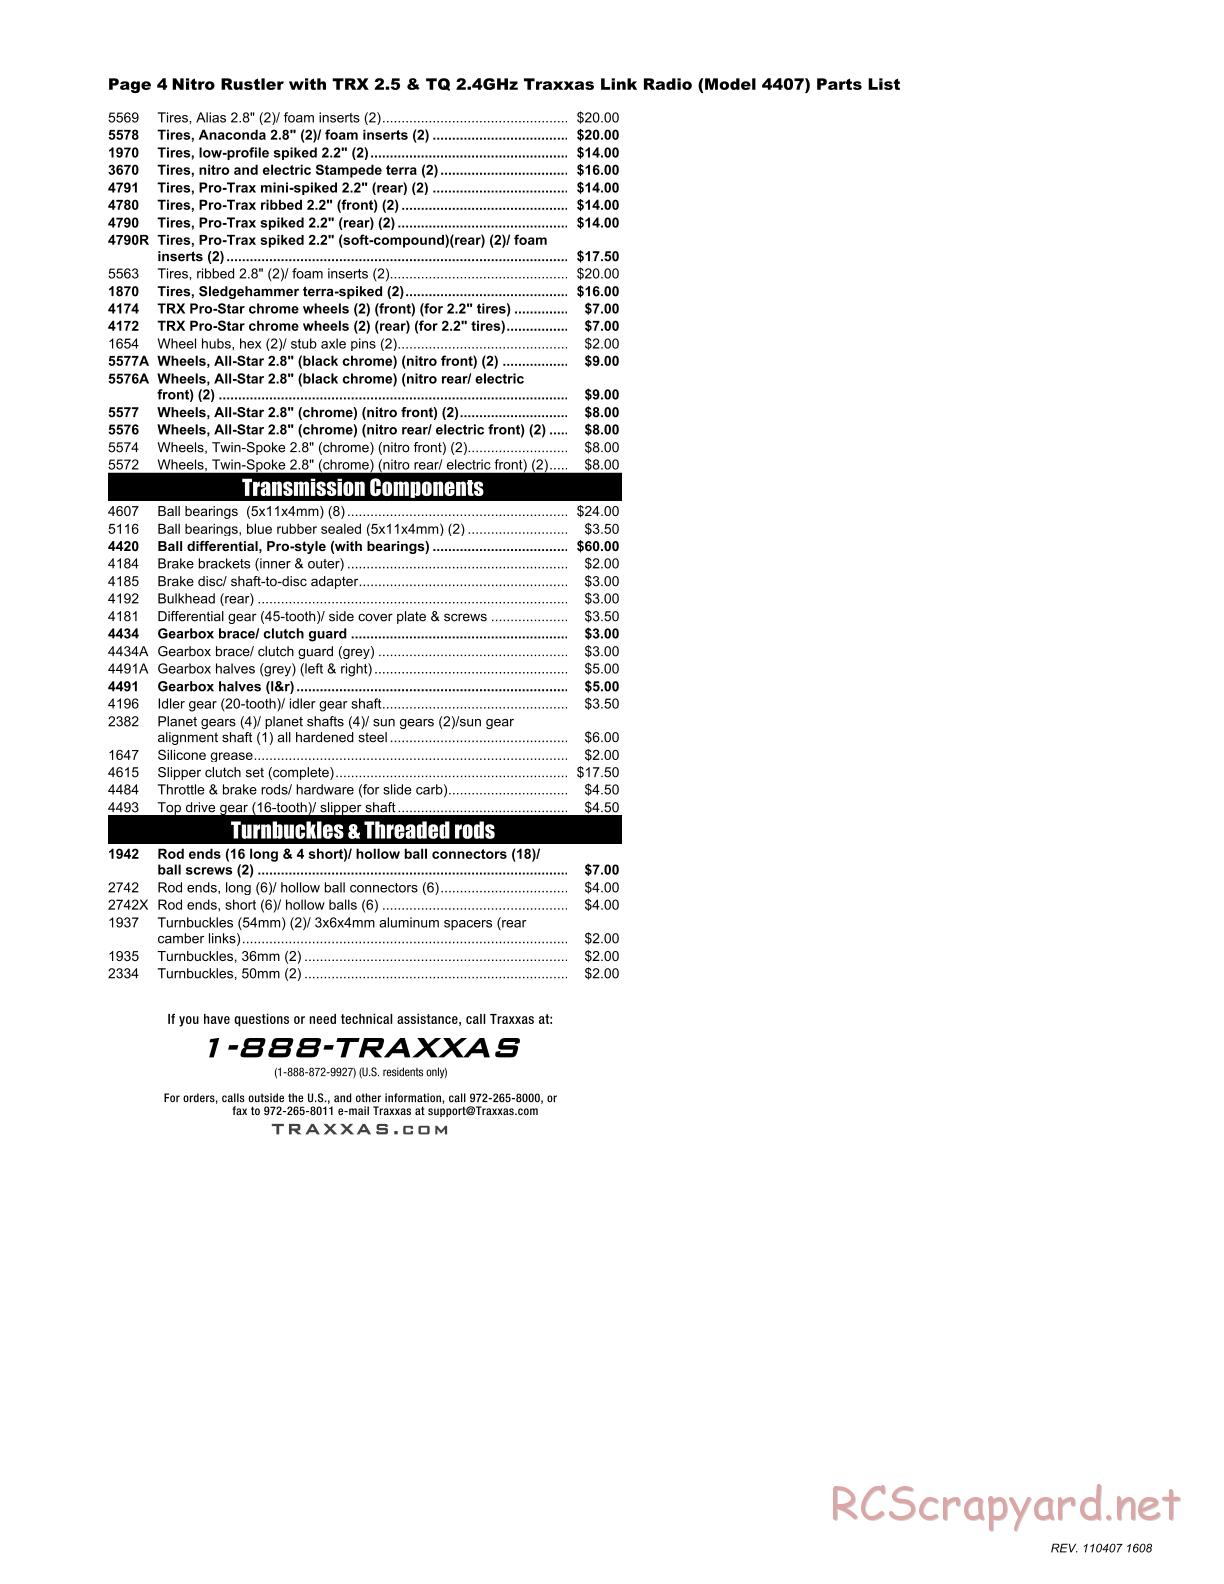 Traxxas - Nitro Rustler (2010) - Parts List - Page 4